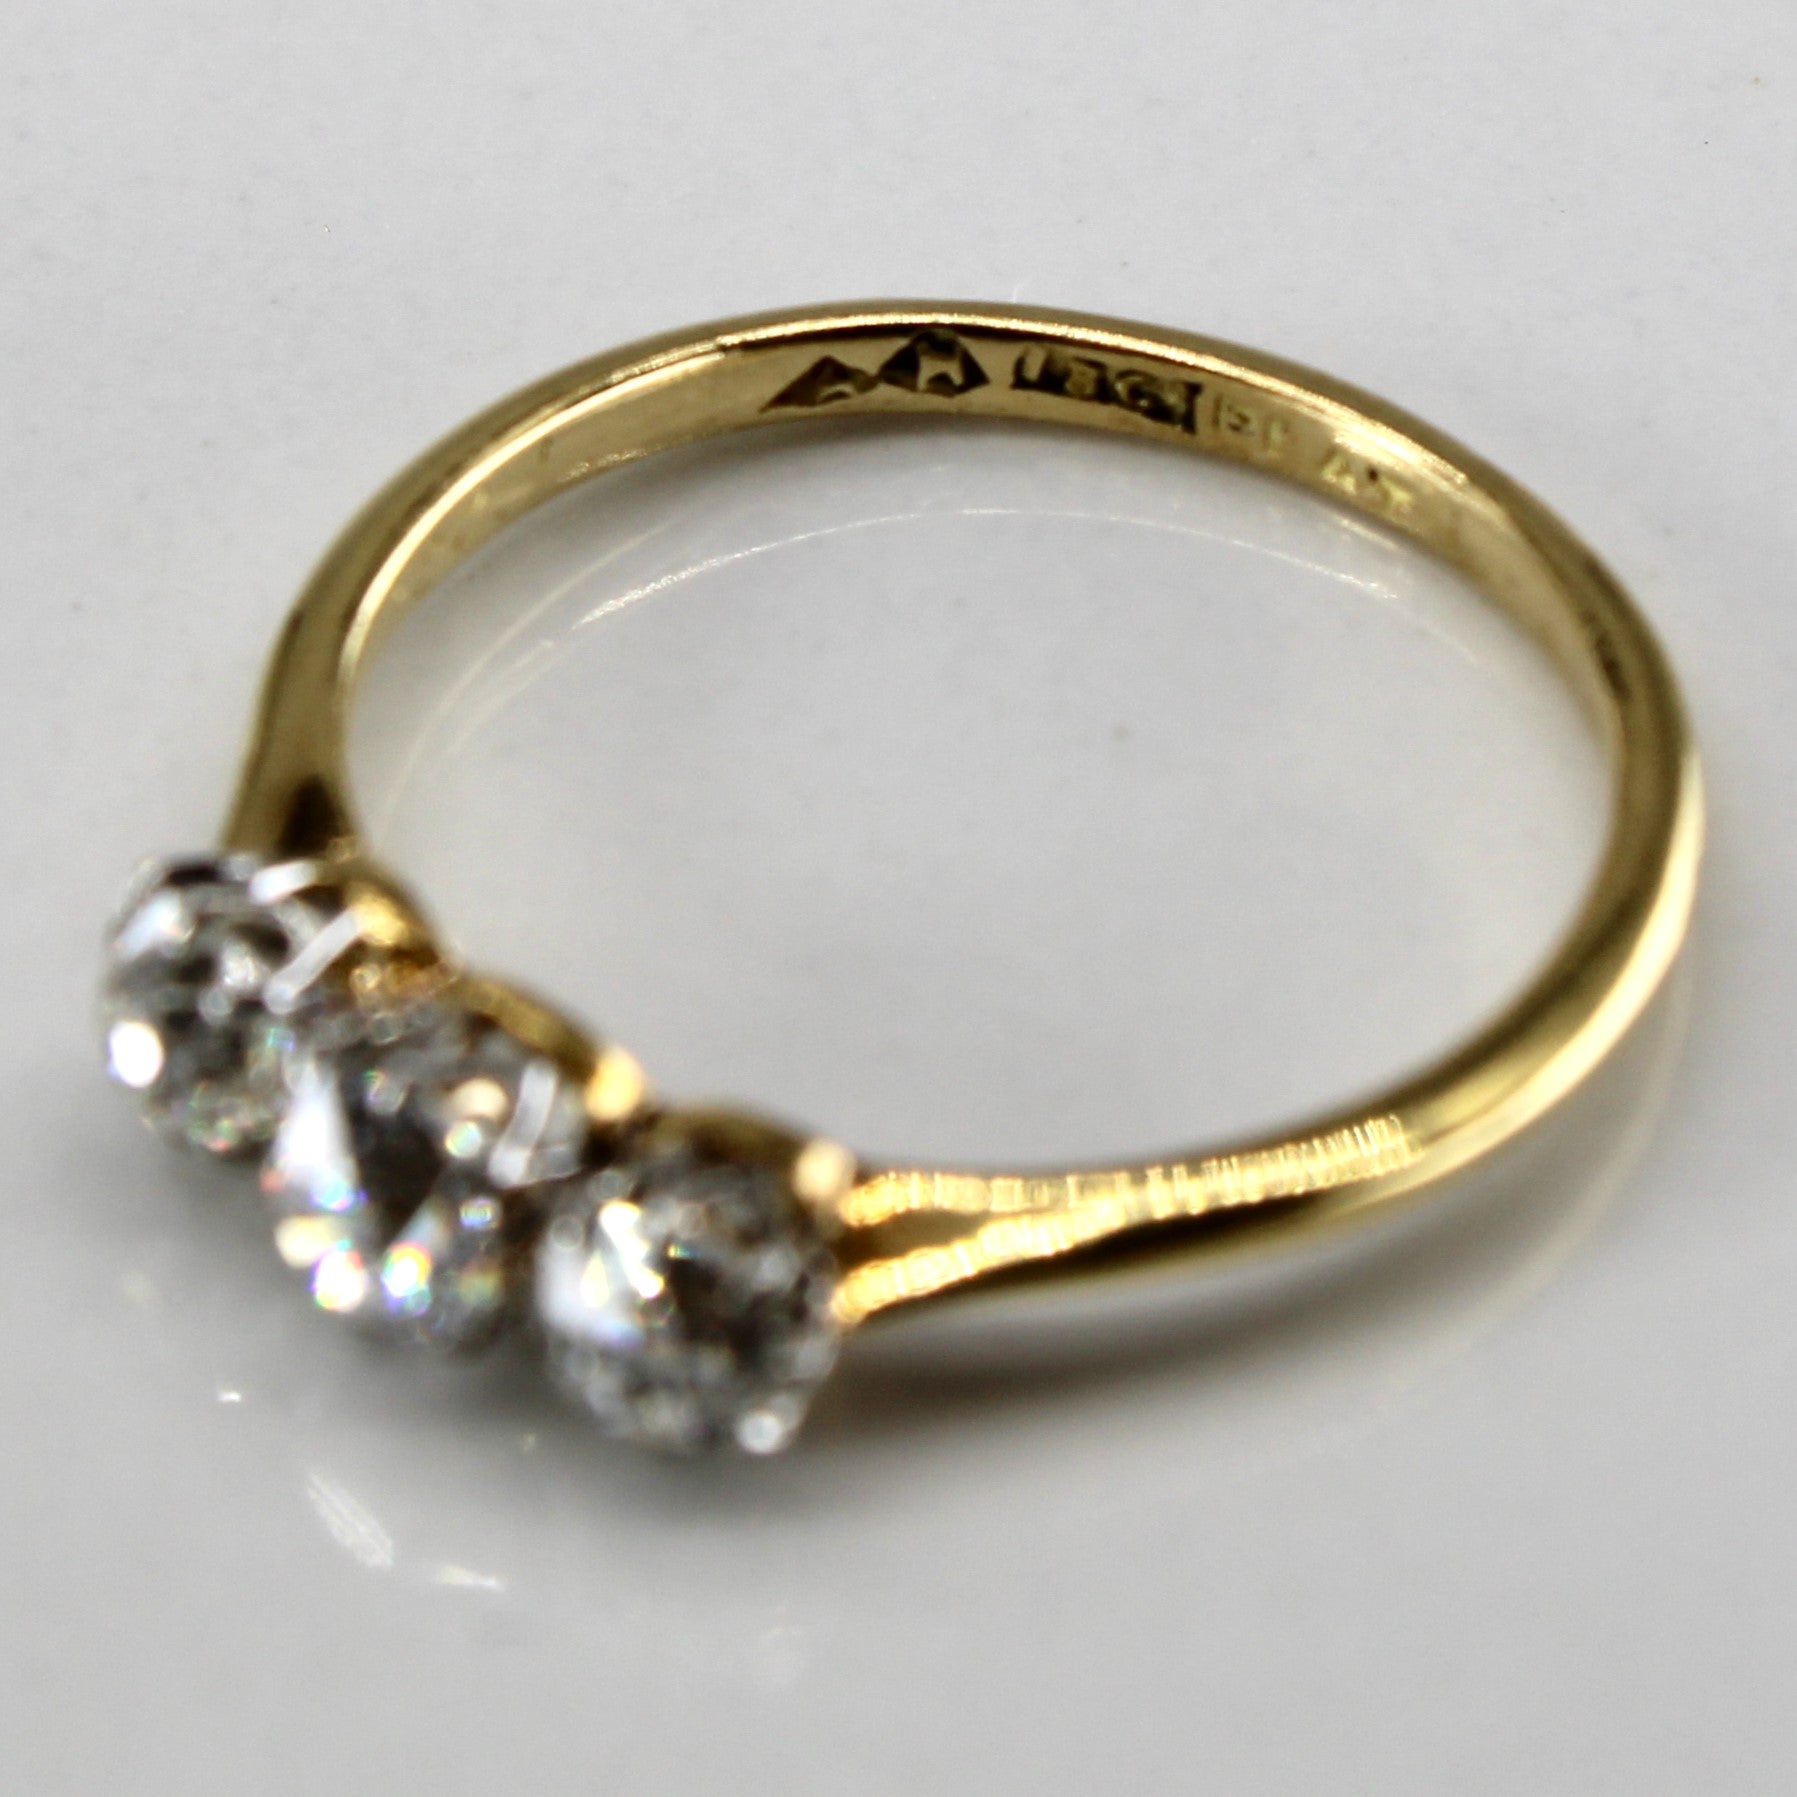 Three Stone Diamond Vintage Ring | 0.46ctw | SZ 6.5 |